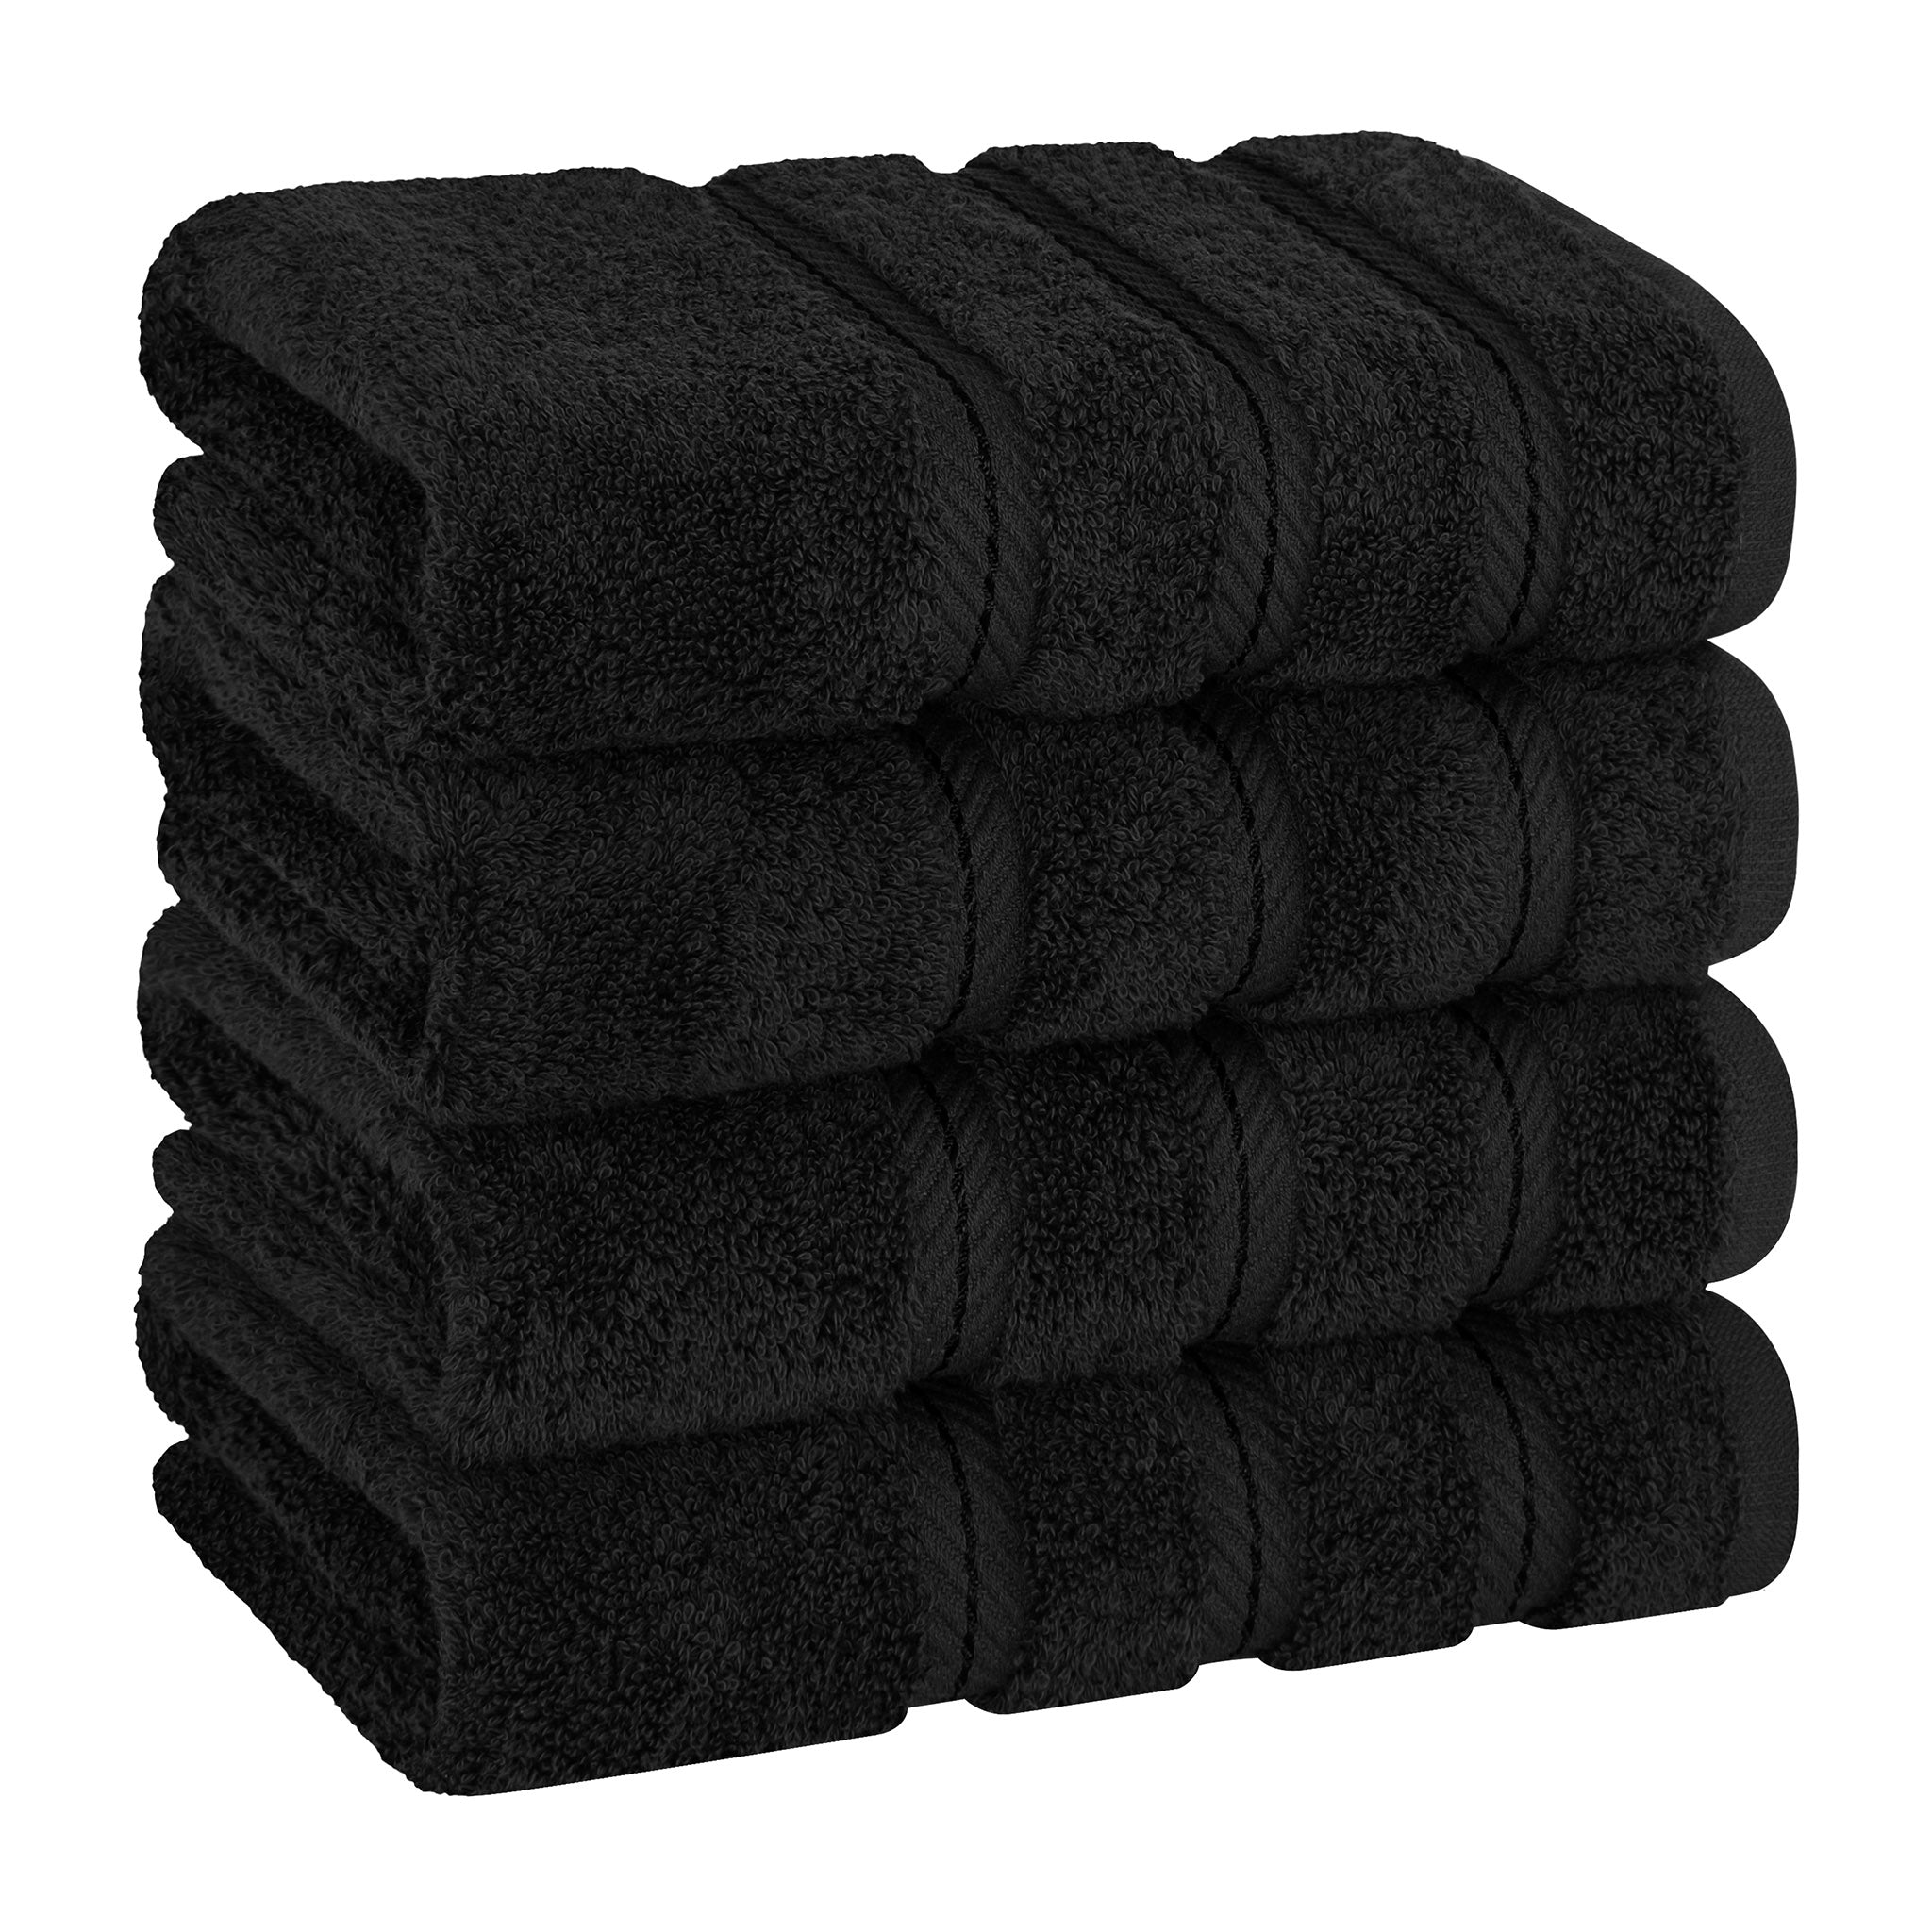  American Soft Linen 100% Turkish Cotton 4 Pack Hand Towel Set  black-1